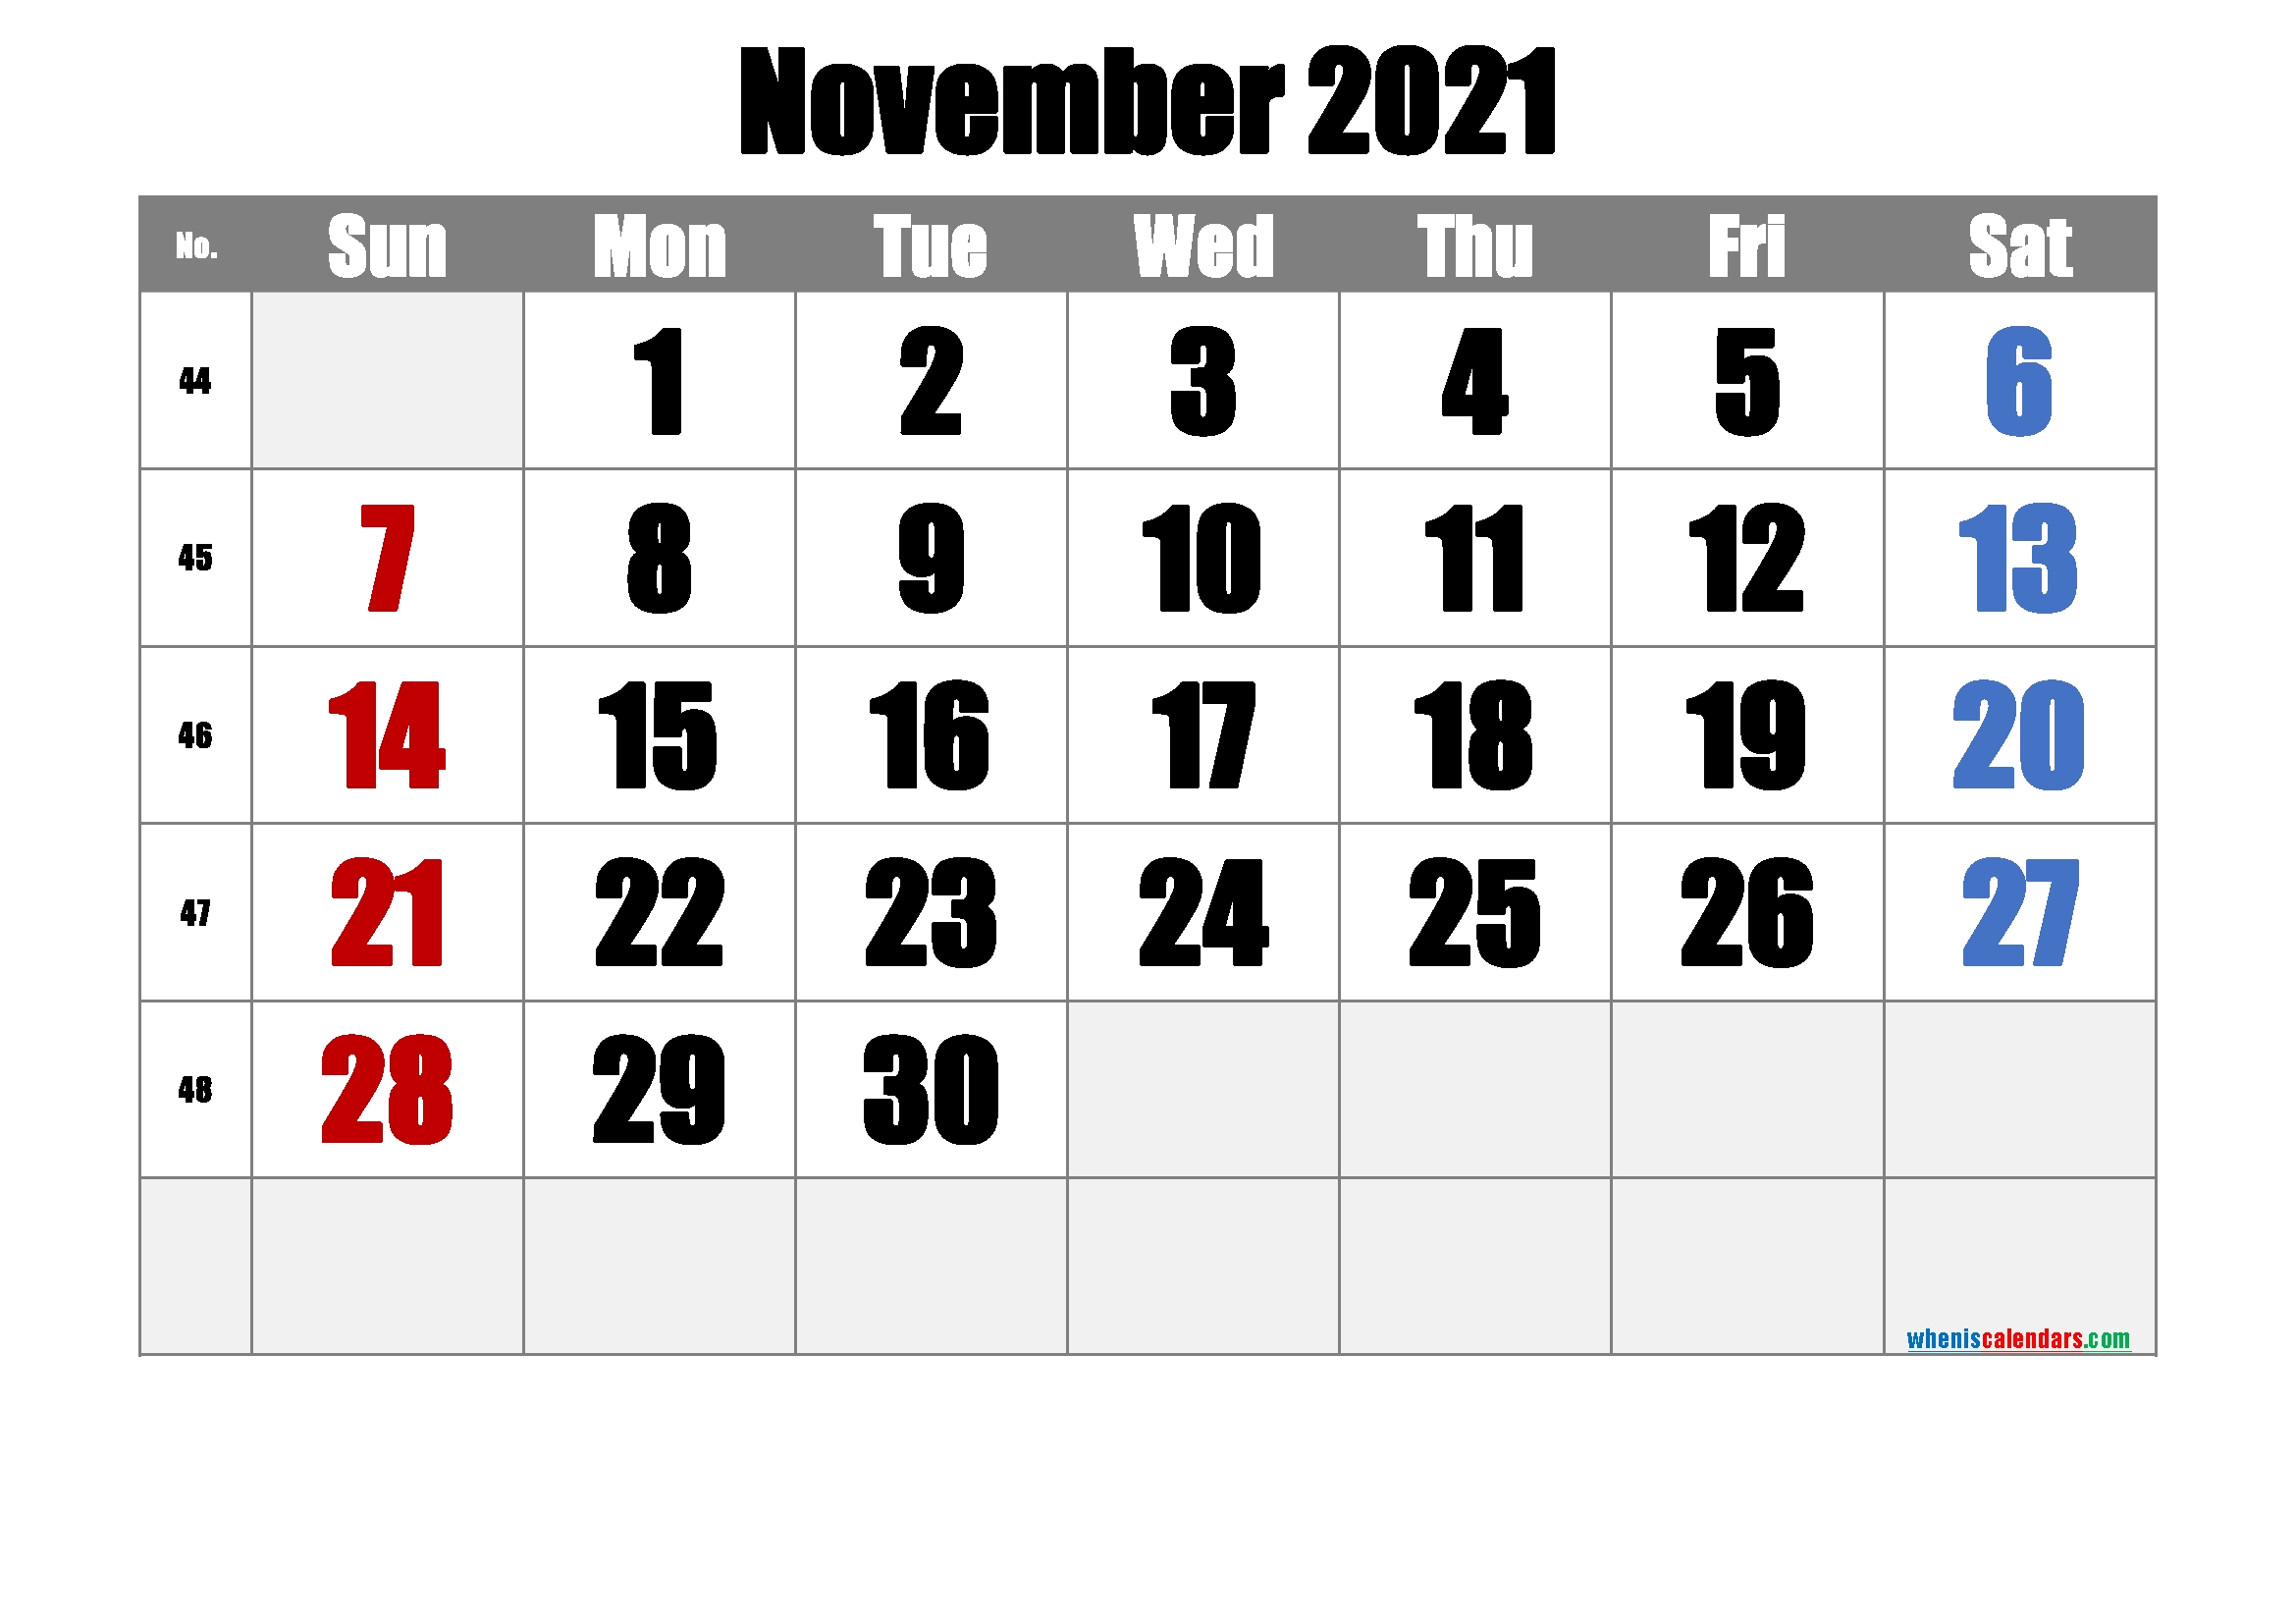 Take November 2021 Calendar